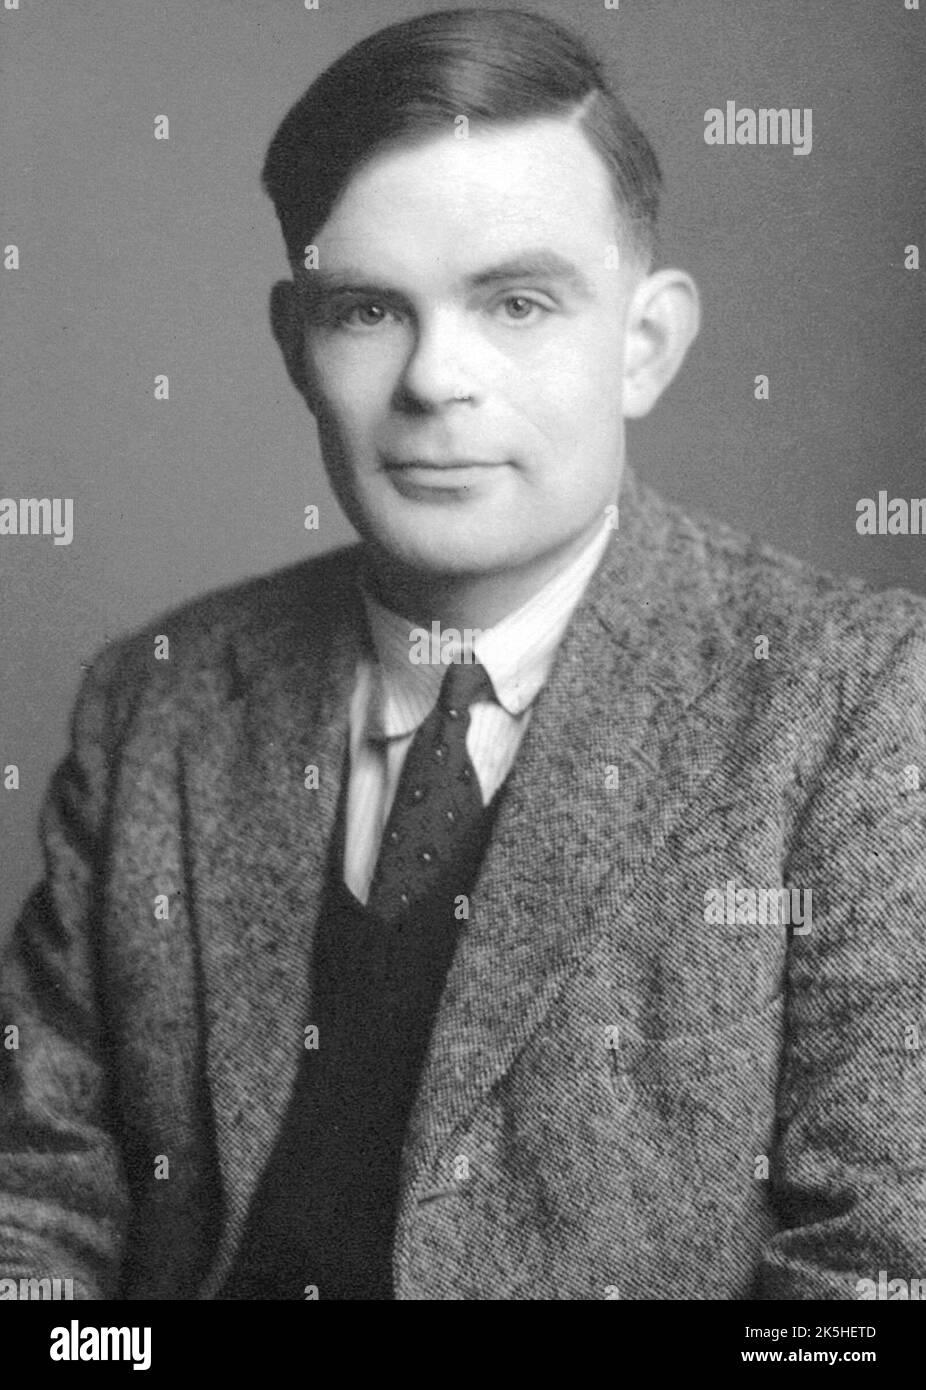 Alan Turing - Education, Movie & Quotes